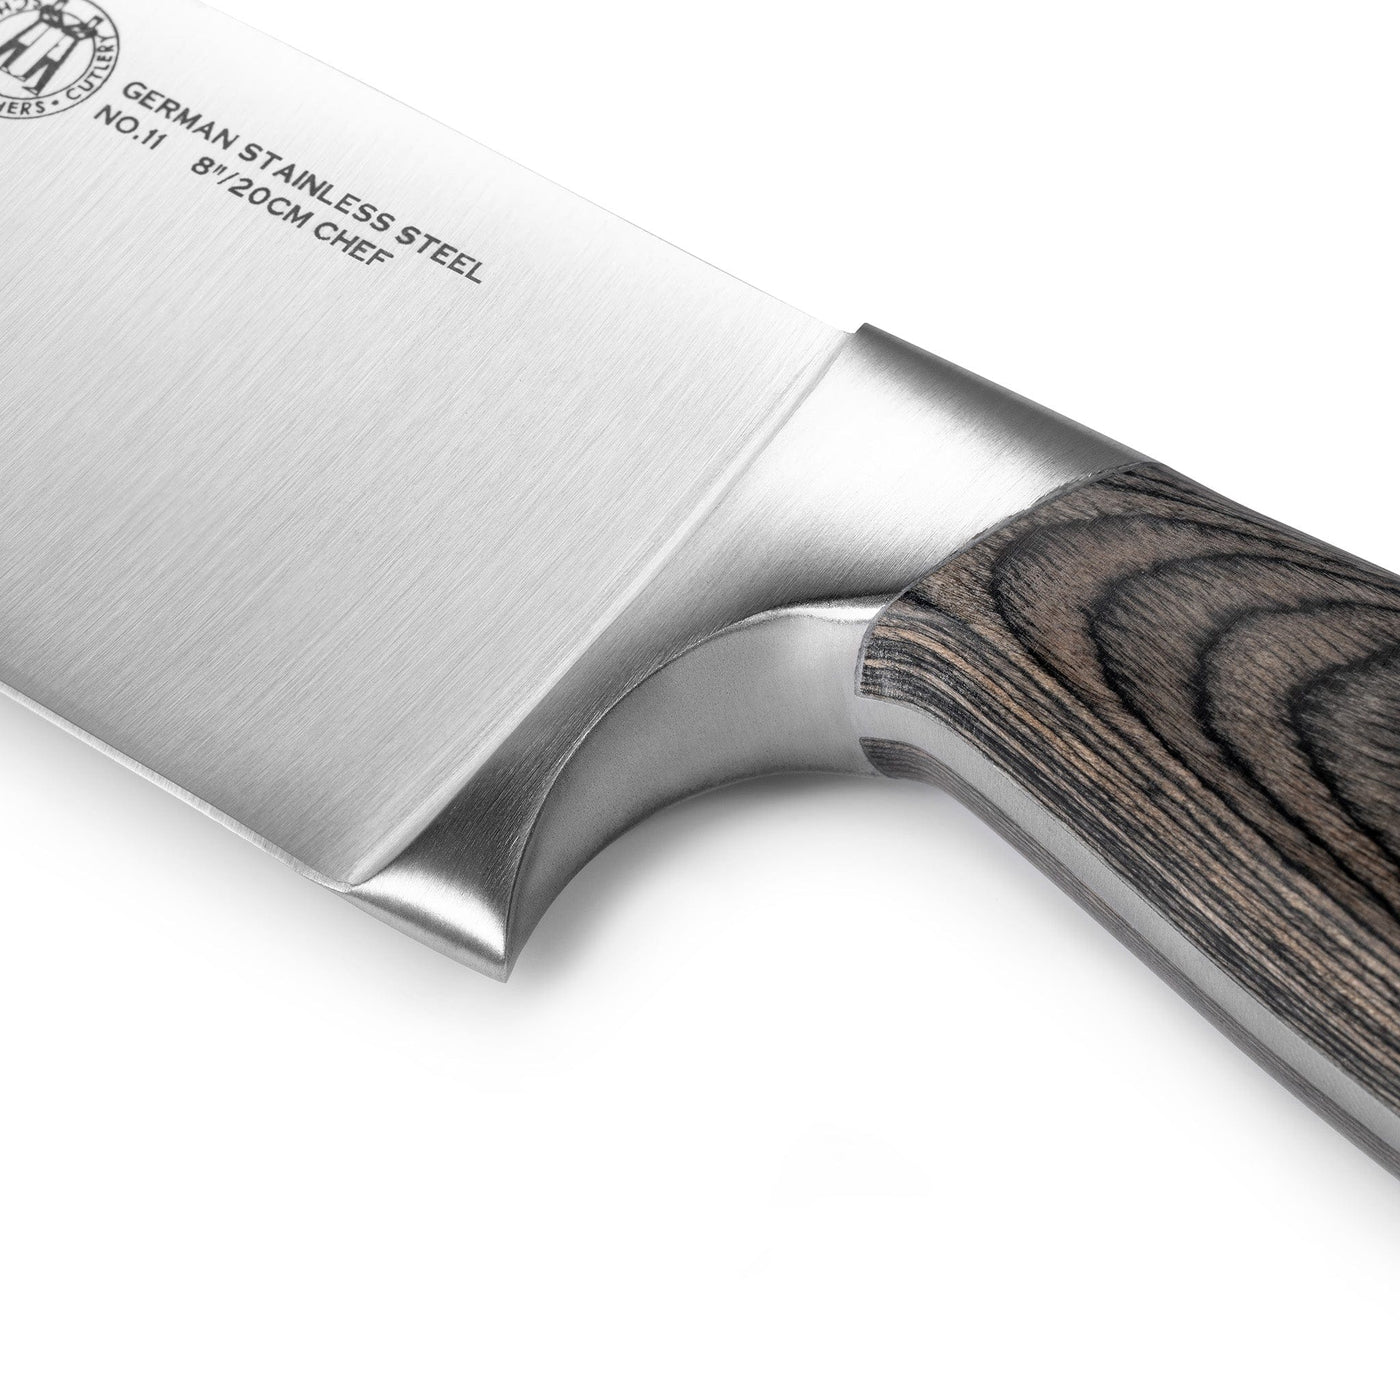 Best Steel For Chefs Knives